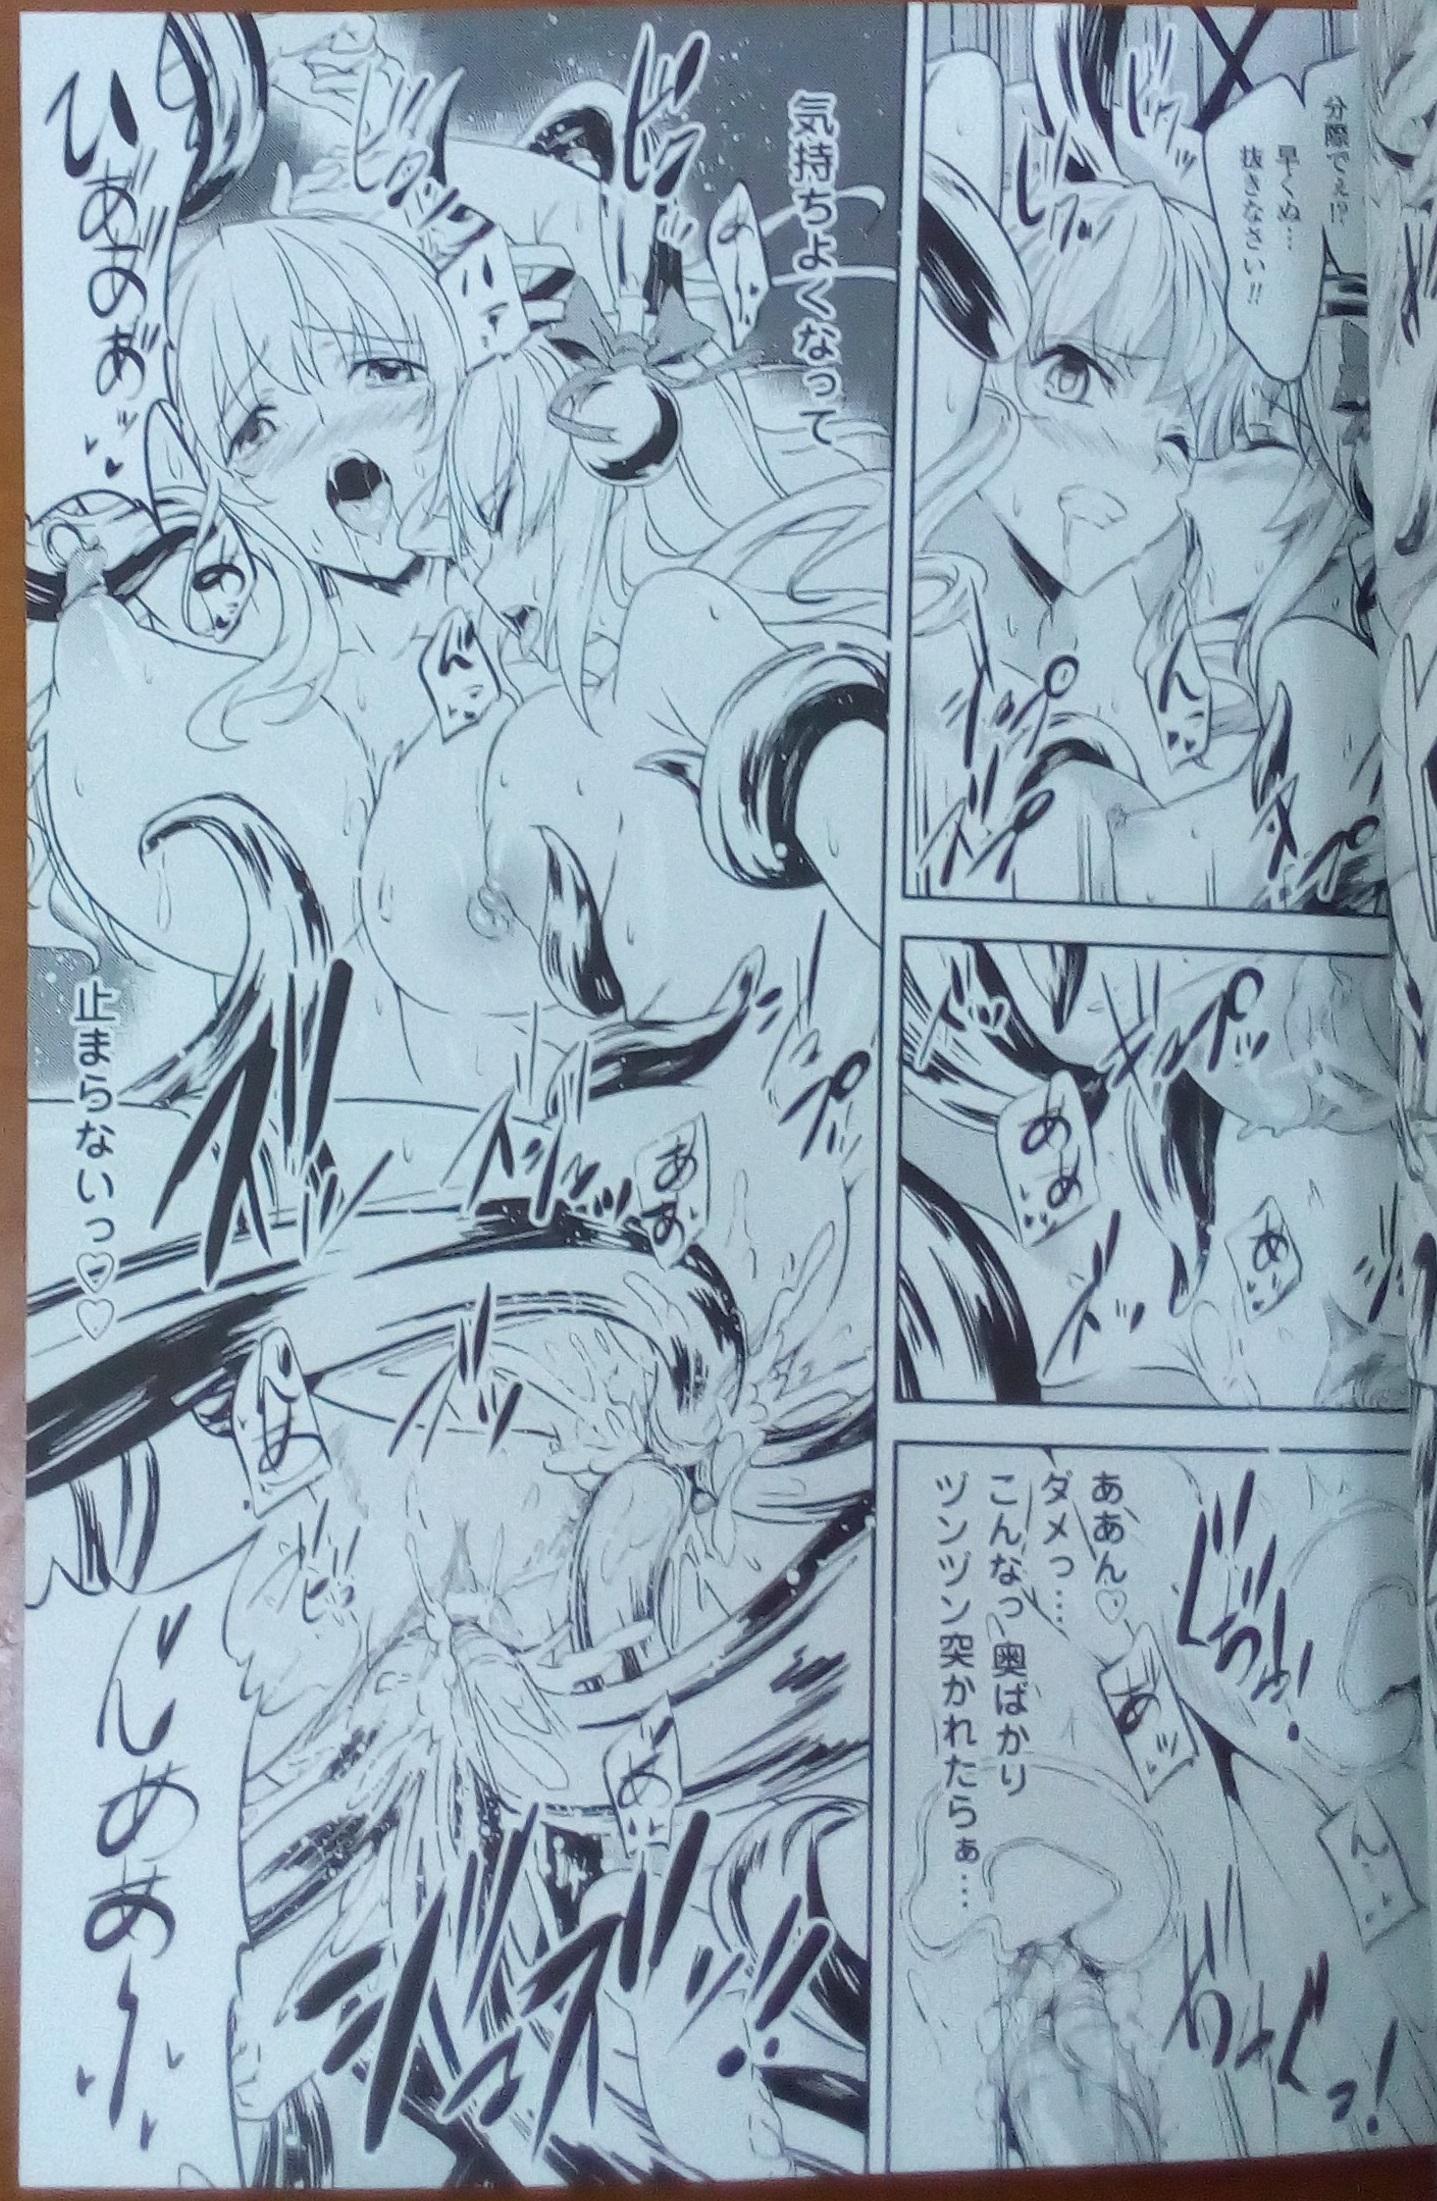 [Erect Sawaru] Shinkyoku no Grimoire III -PANDRA saga 2nd story-  Append book [Photoed] 9